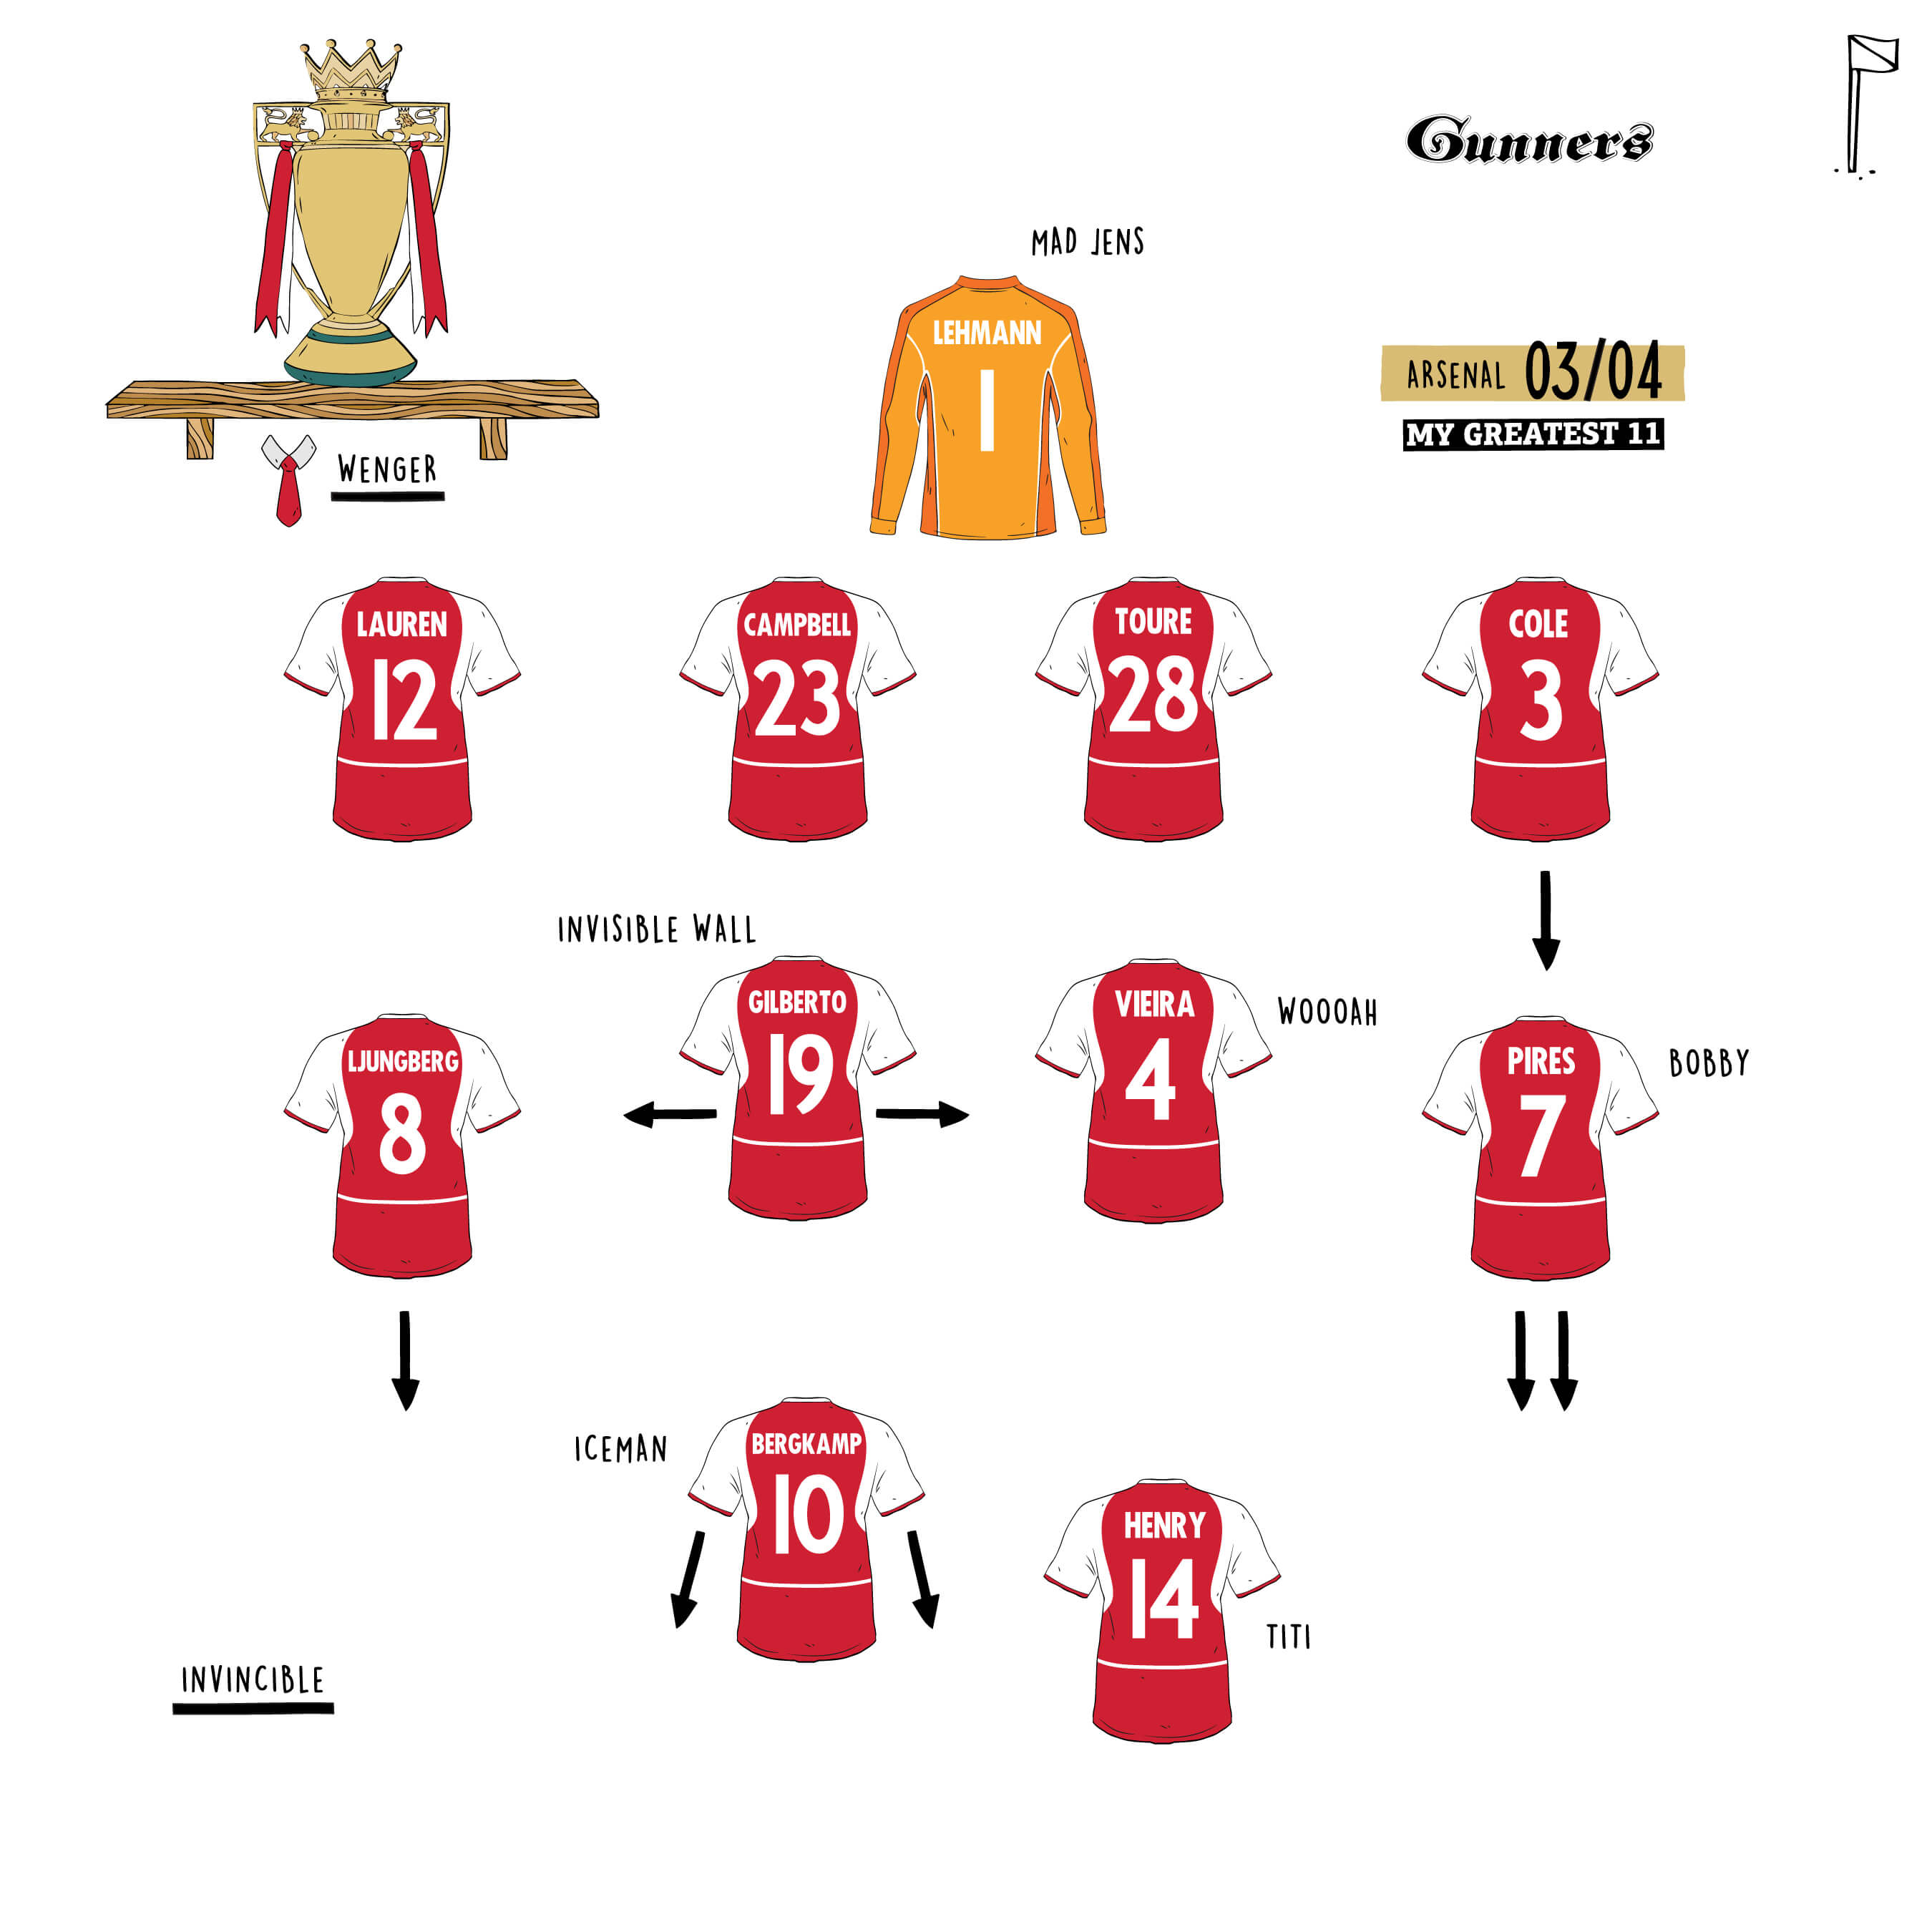 Arsenal 03/04 Team